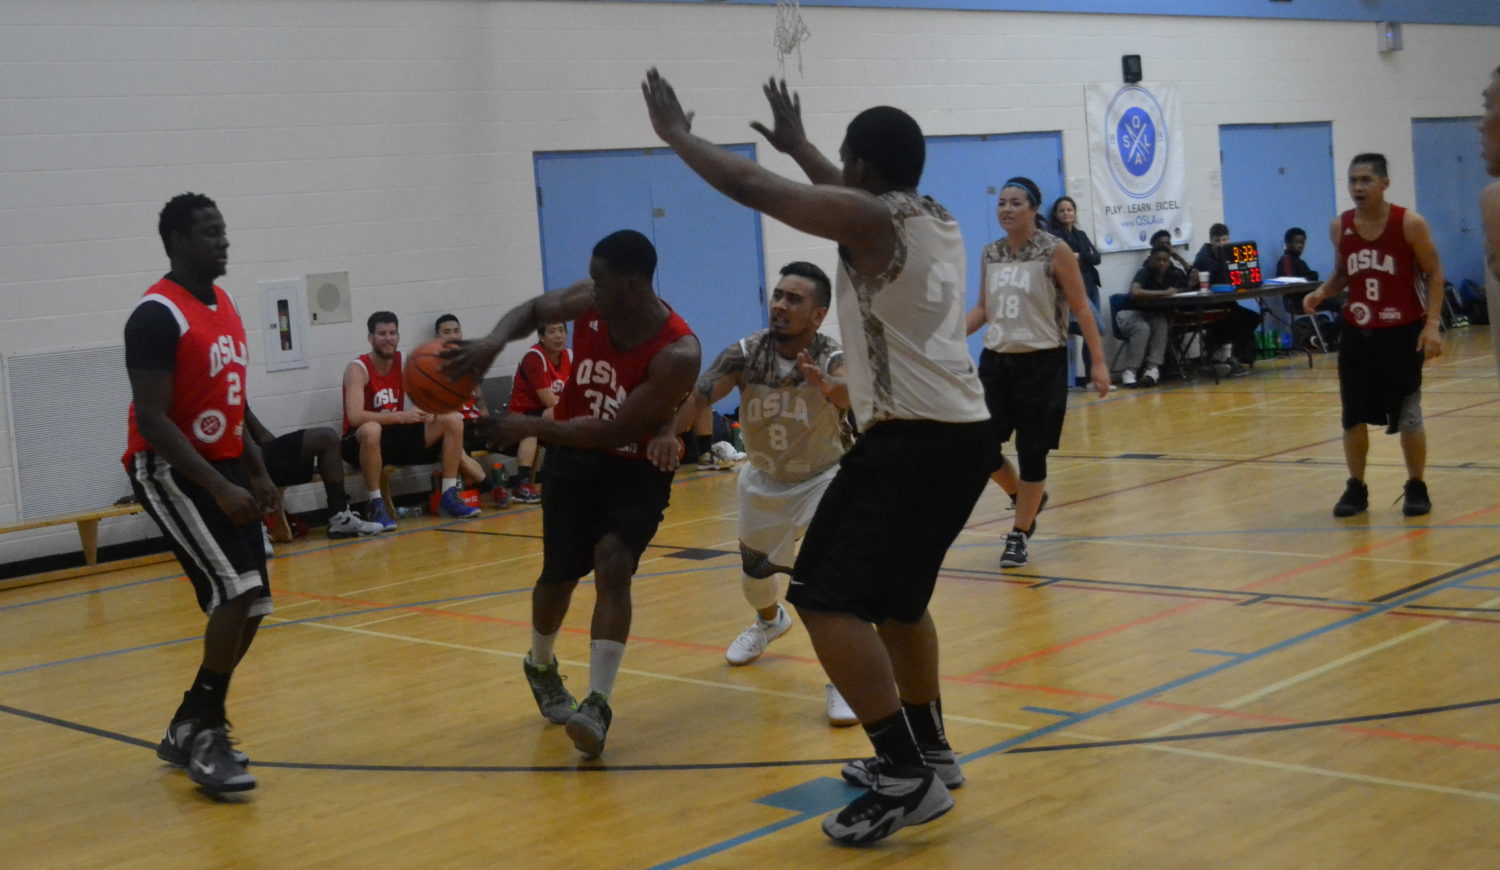 qsla coed basketball league Toronto 2k Raptors